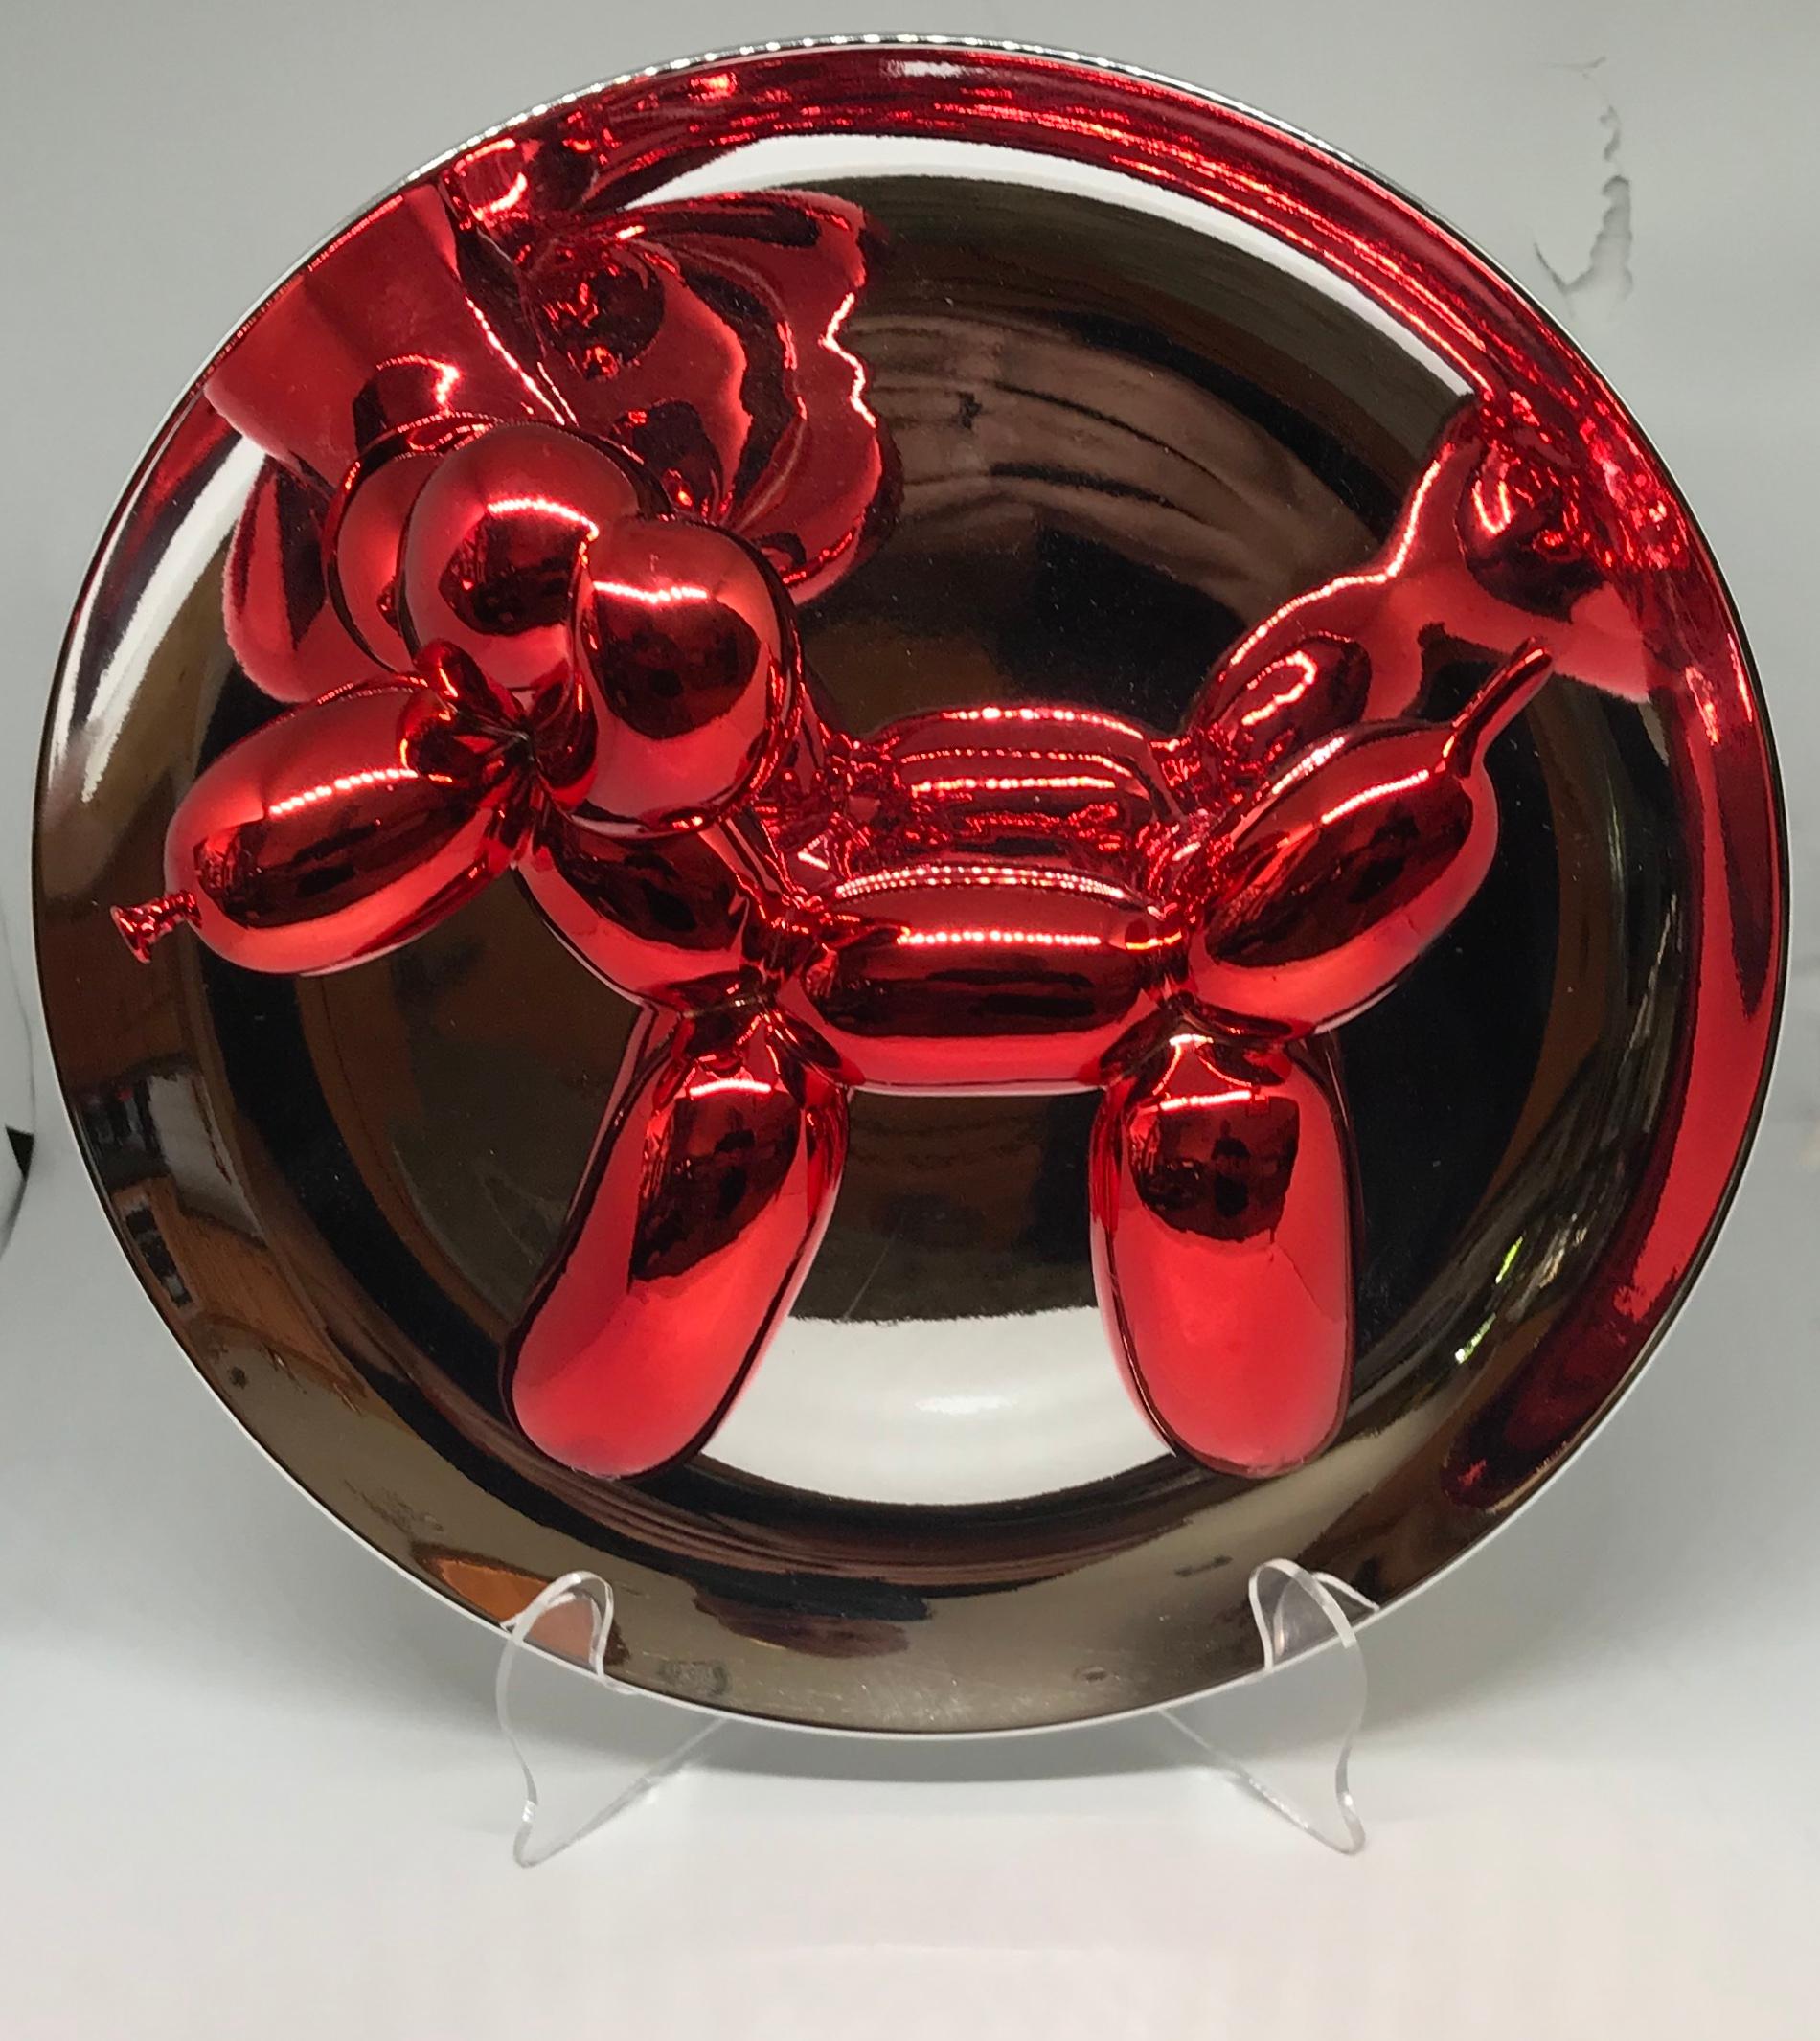 Balloon Dog (Red) - Pop Art Sculpture by Jeff Koons